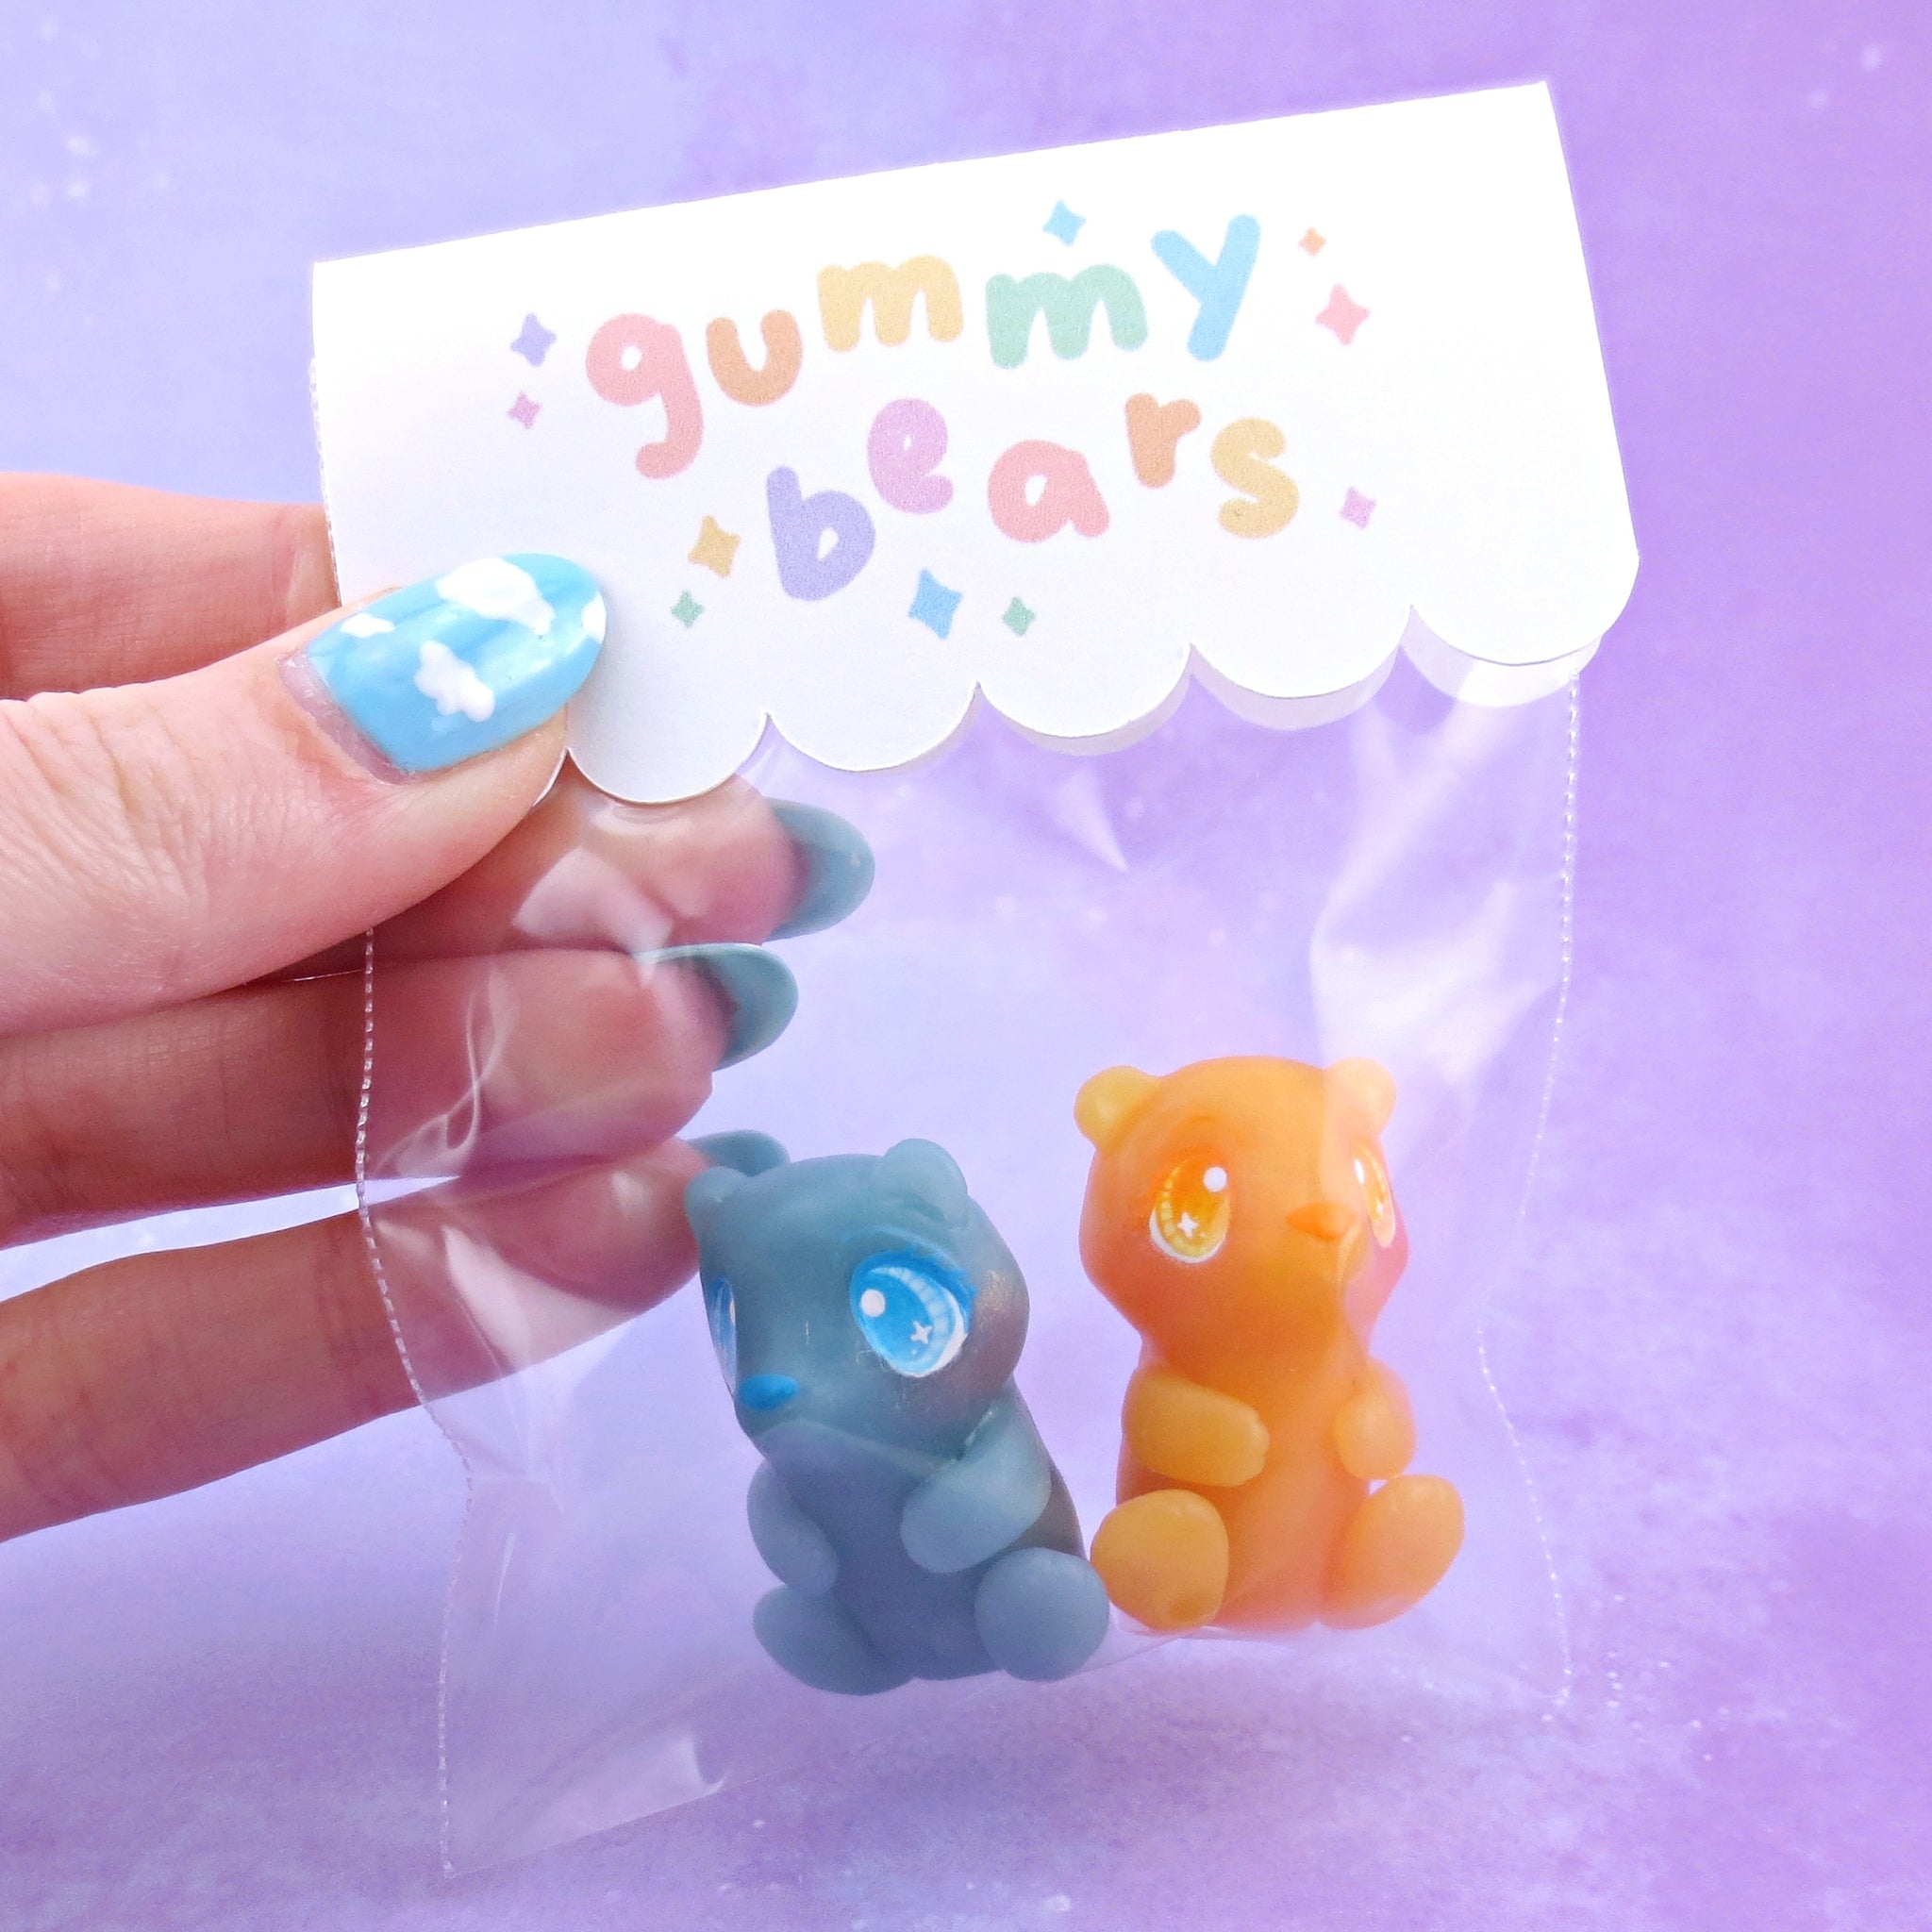 Orange and Blue Raspberry "Gummy" Bear Figurine Set - Polymer Clay Gummy Candy Collection